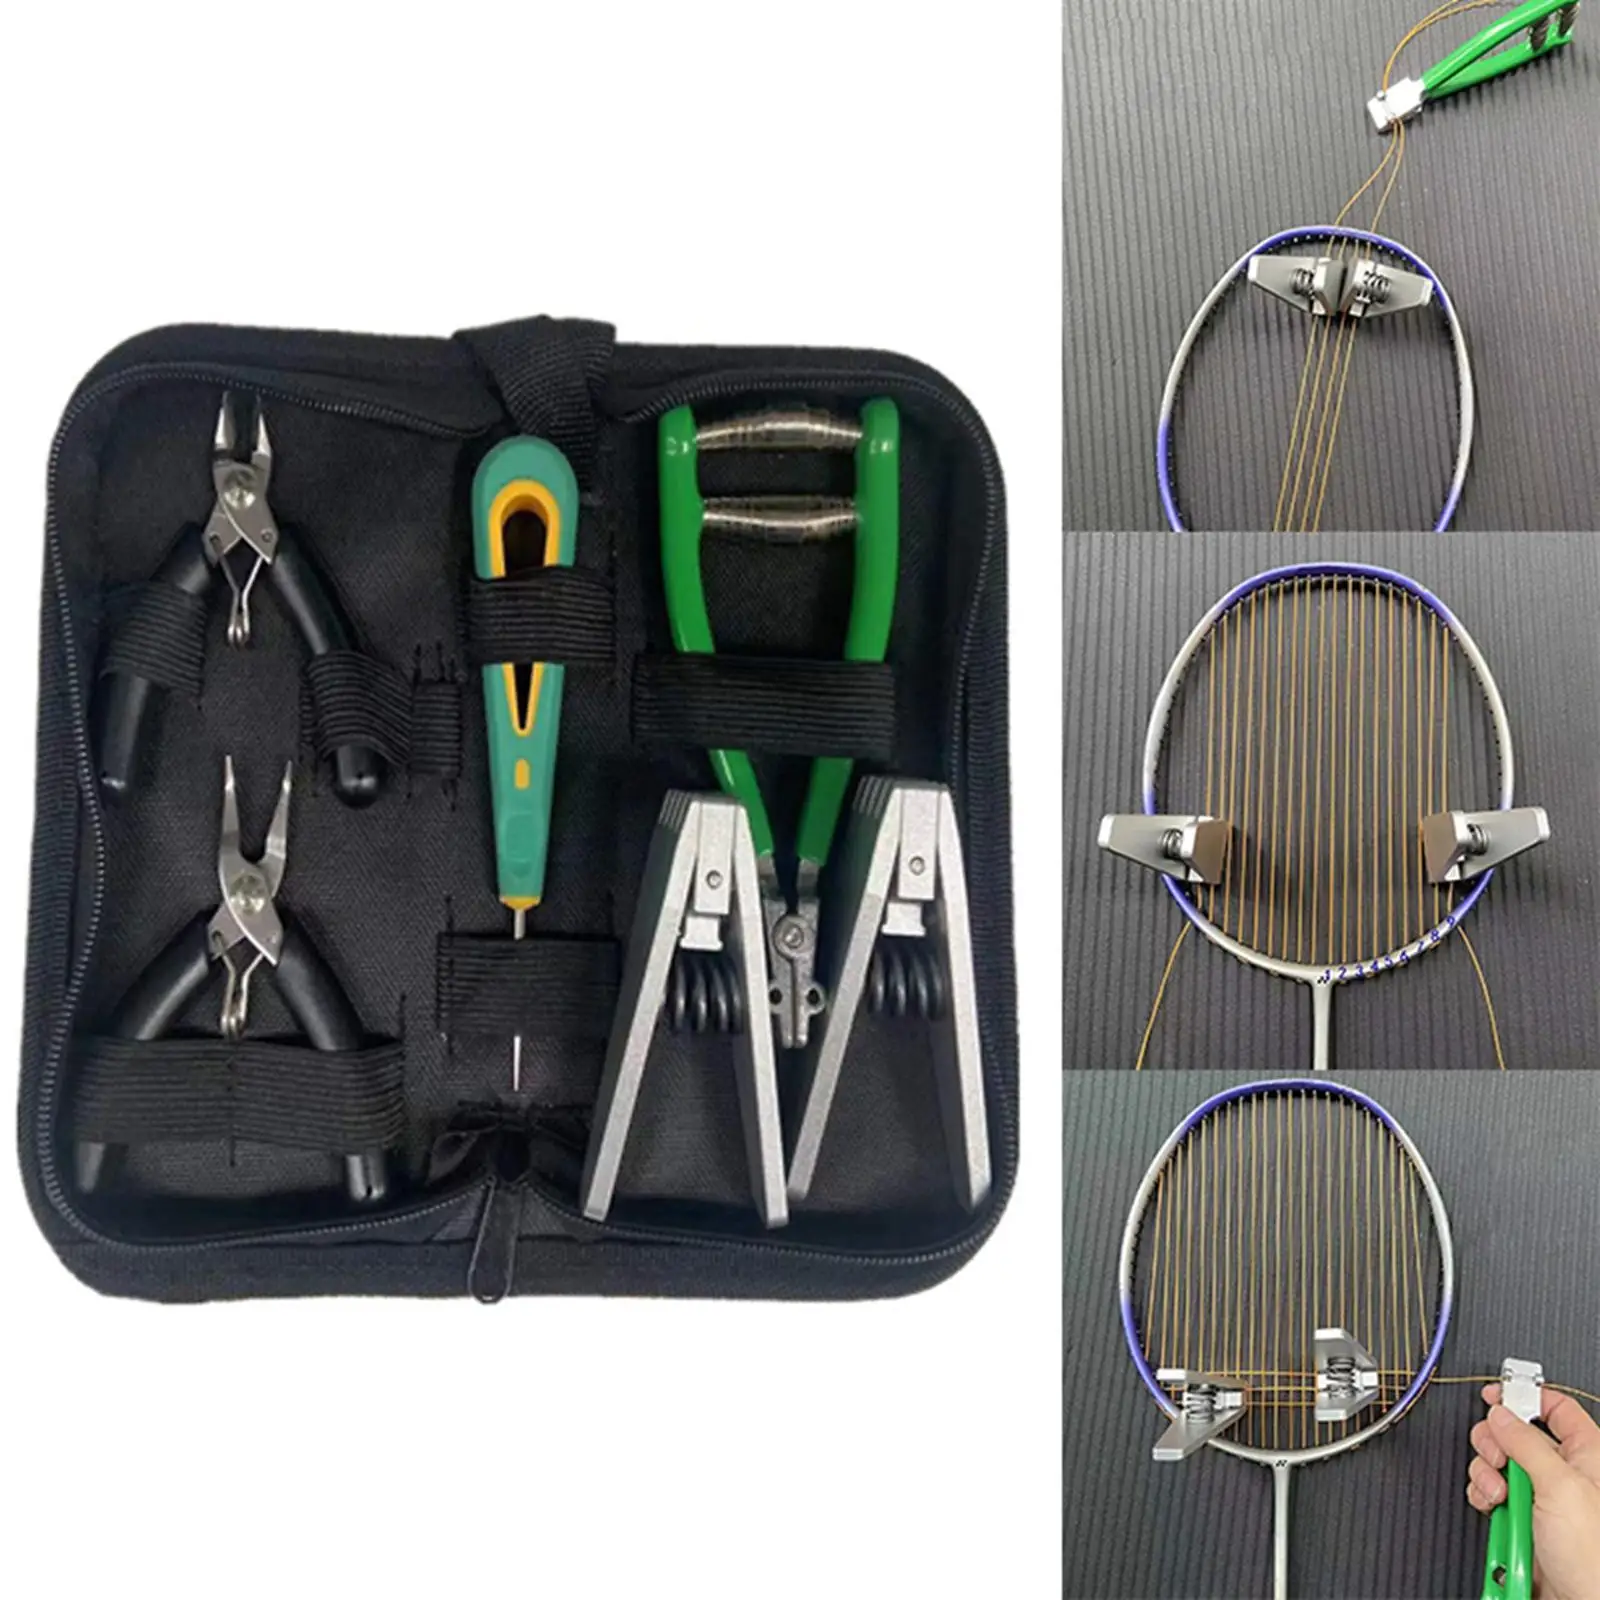 Portable Starting Stringing Clamp Tool Kit Nippers Stringing Machine Starter Awl Tennis Stringer Pro for Badminton Tennis Racket